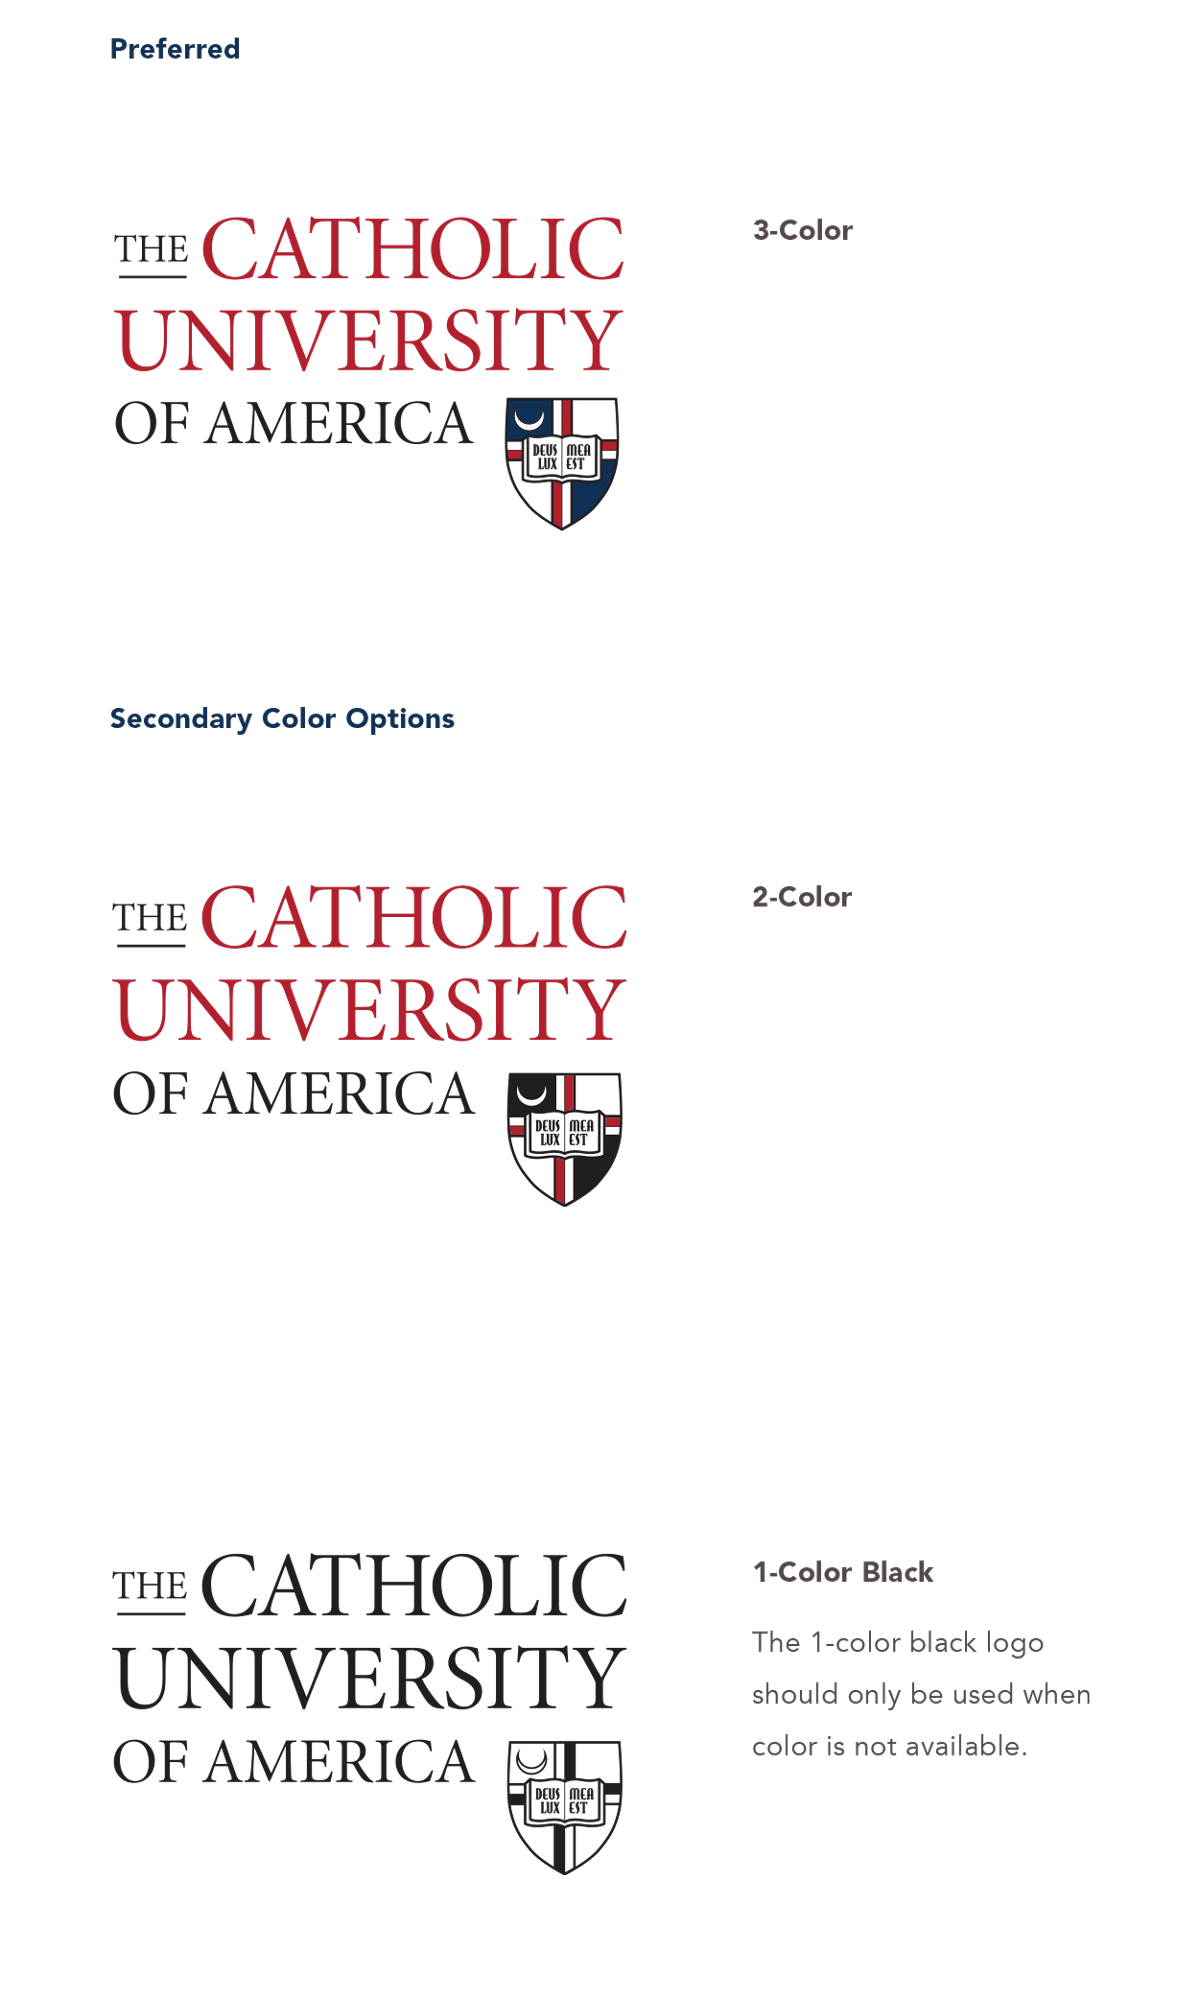 University Identity - logo color examples